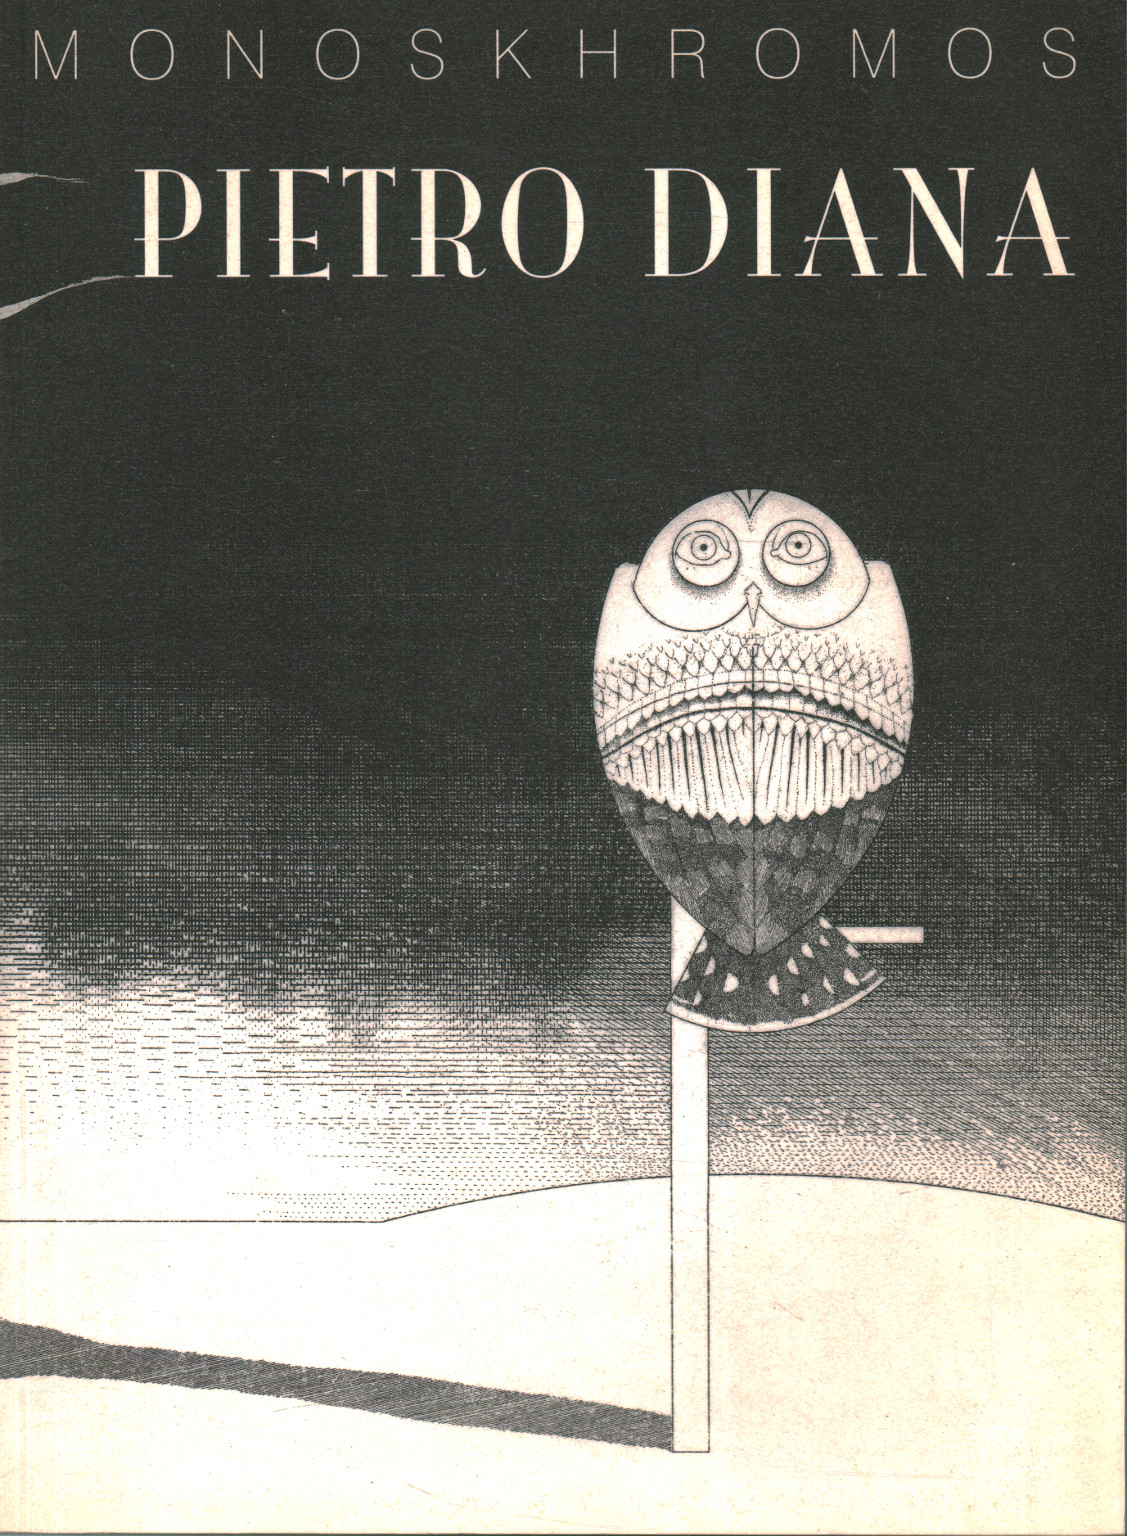 Pedro Diana